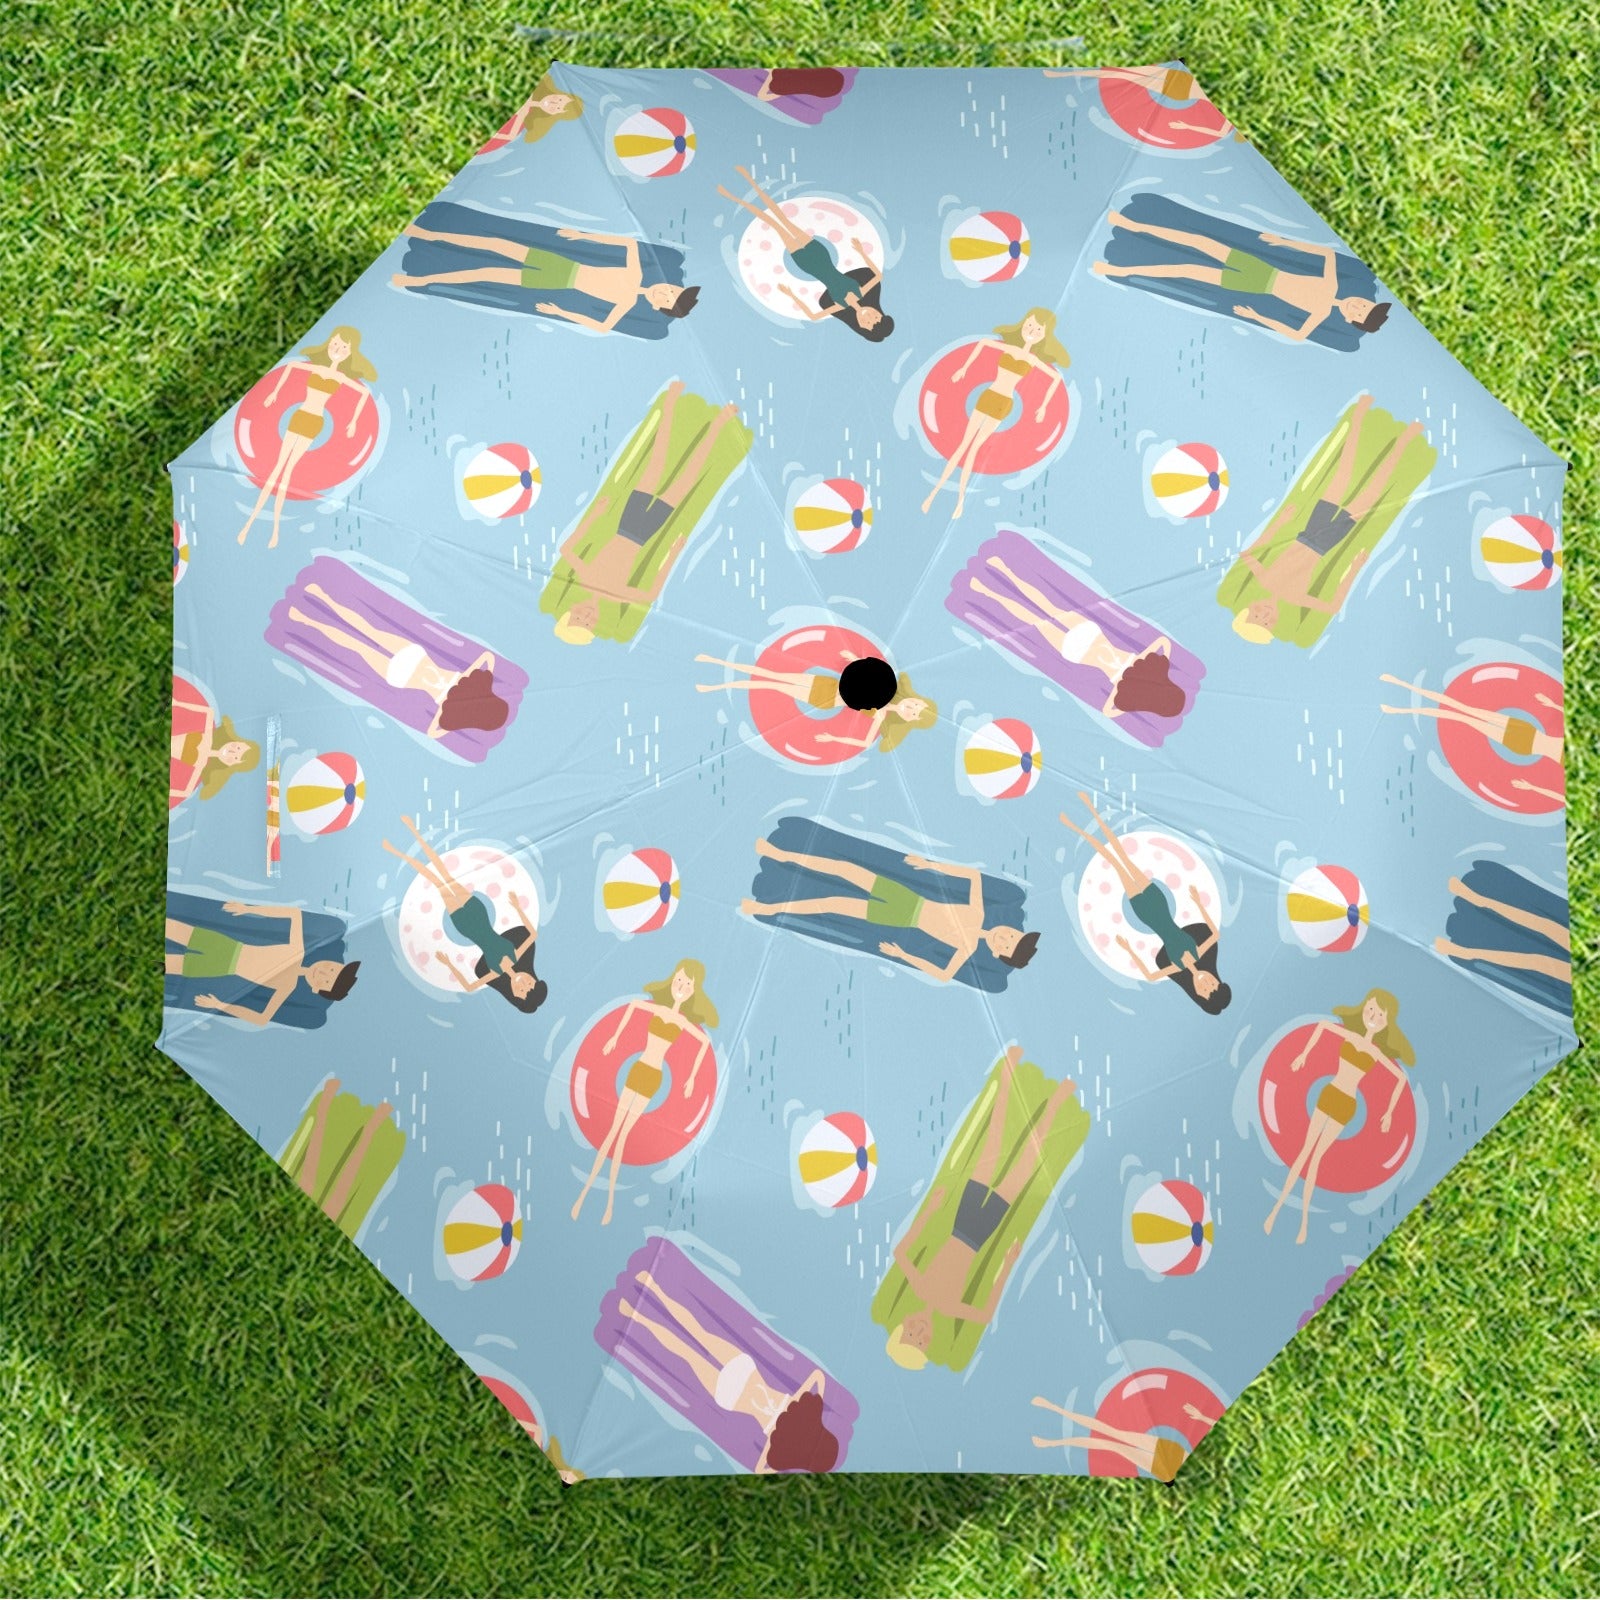 Beach Float - Semi-Automatic Foldable Umbrella Semi-Automatic Foldable Umbrella